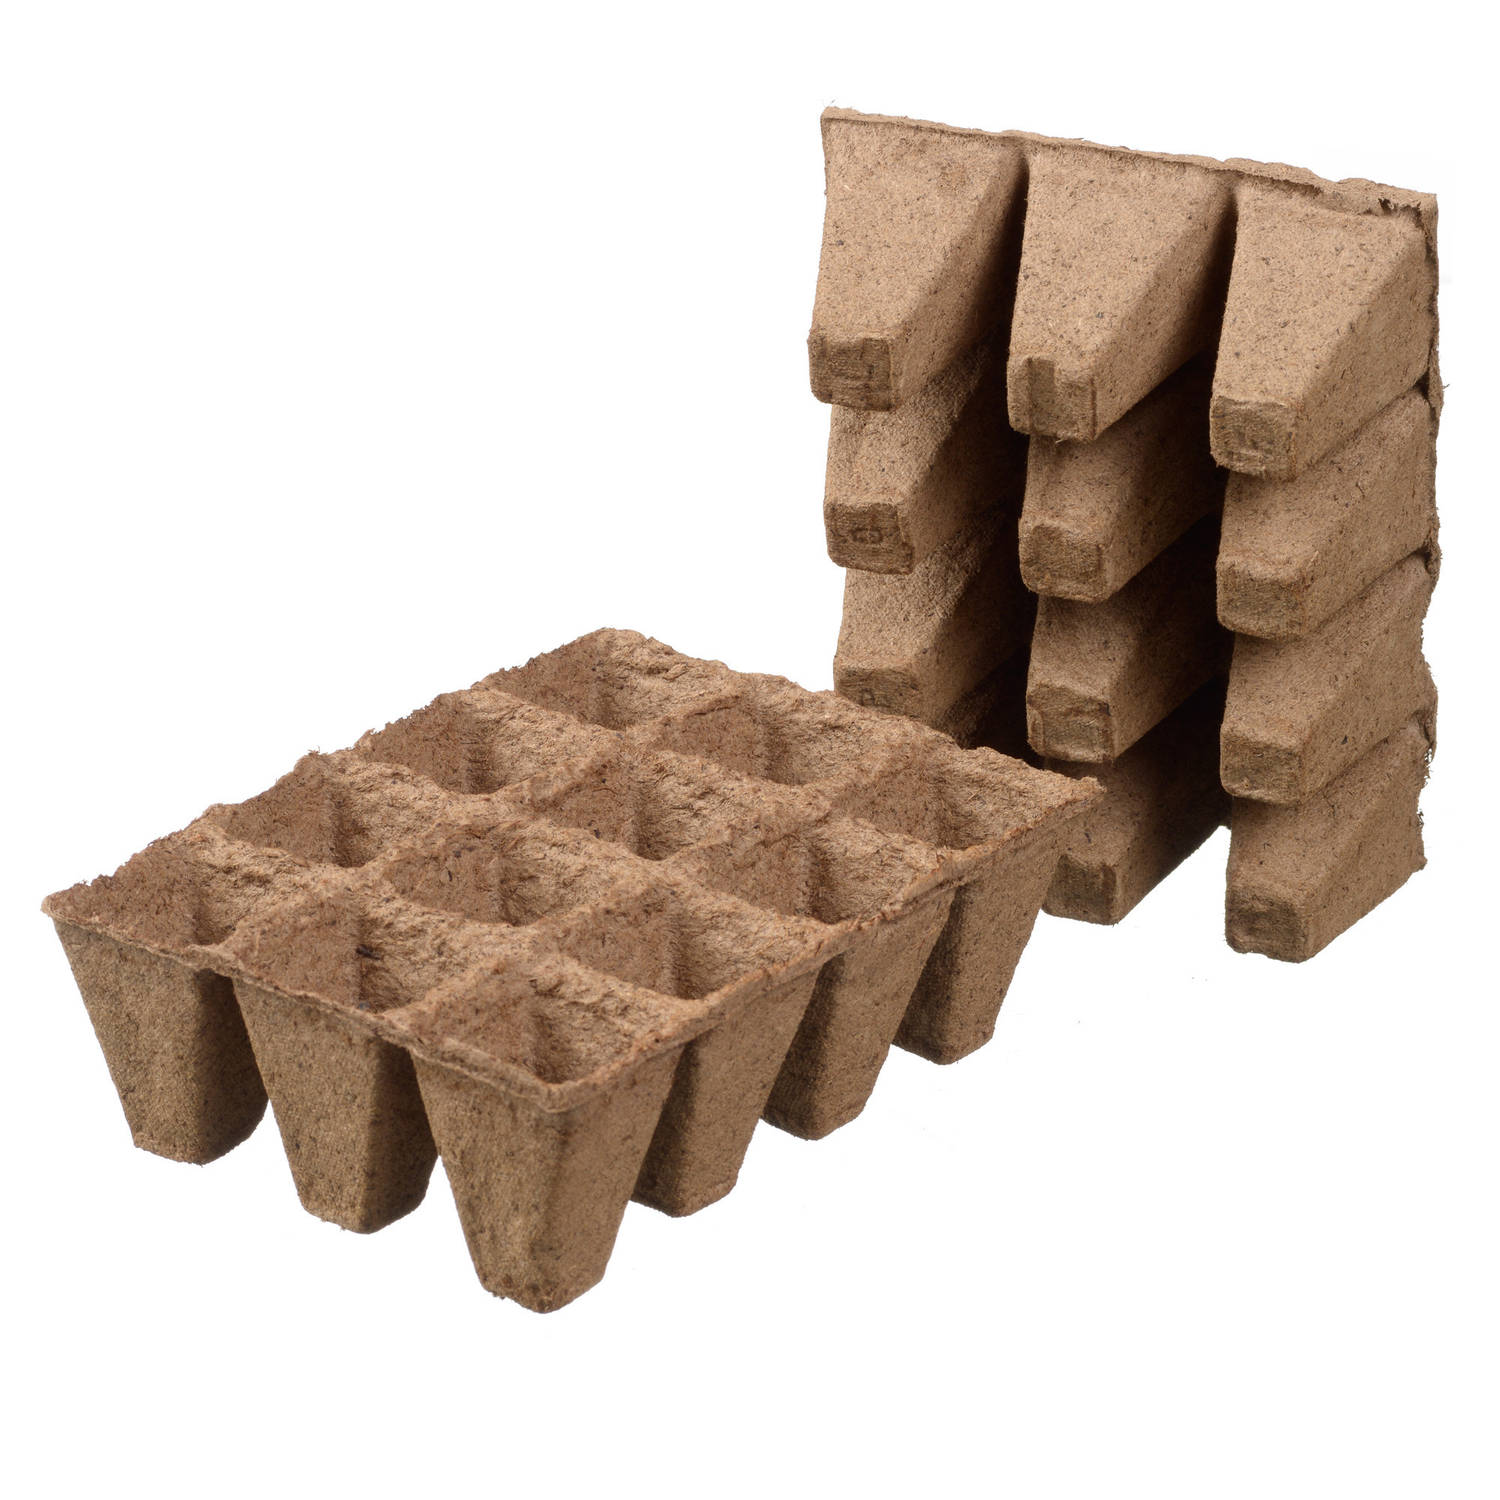 6x stuks Houtvezel kweekpotjes/stekpotjes trays met 12 vakjes 5 x 4 cm - Stekpotjes